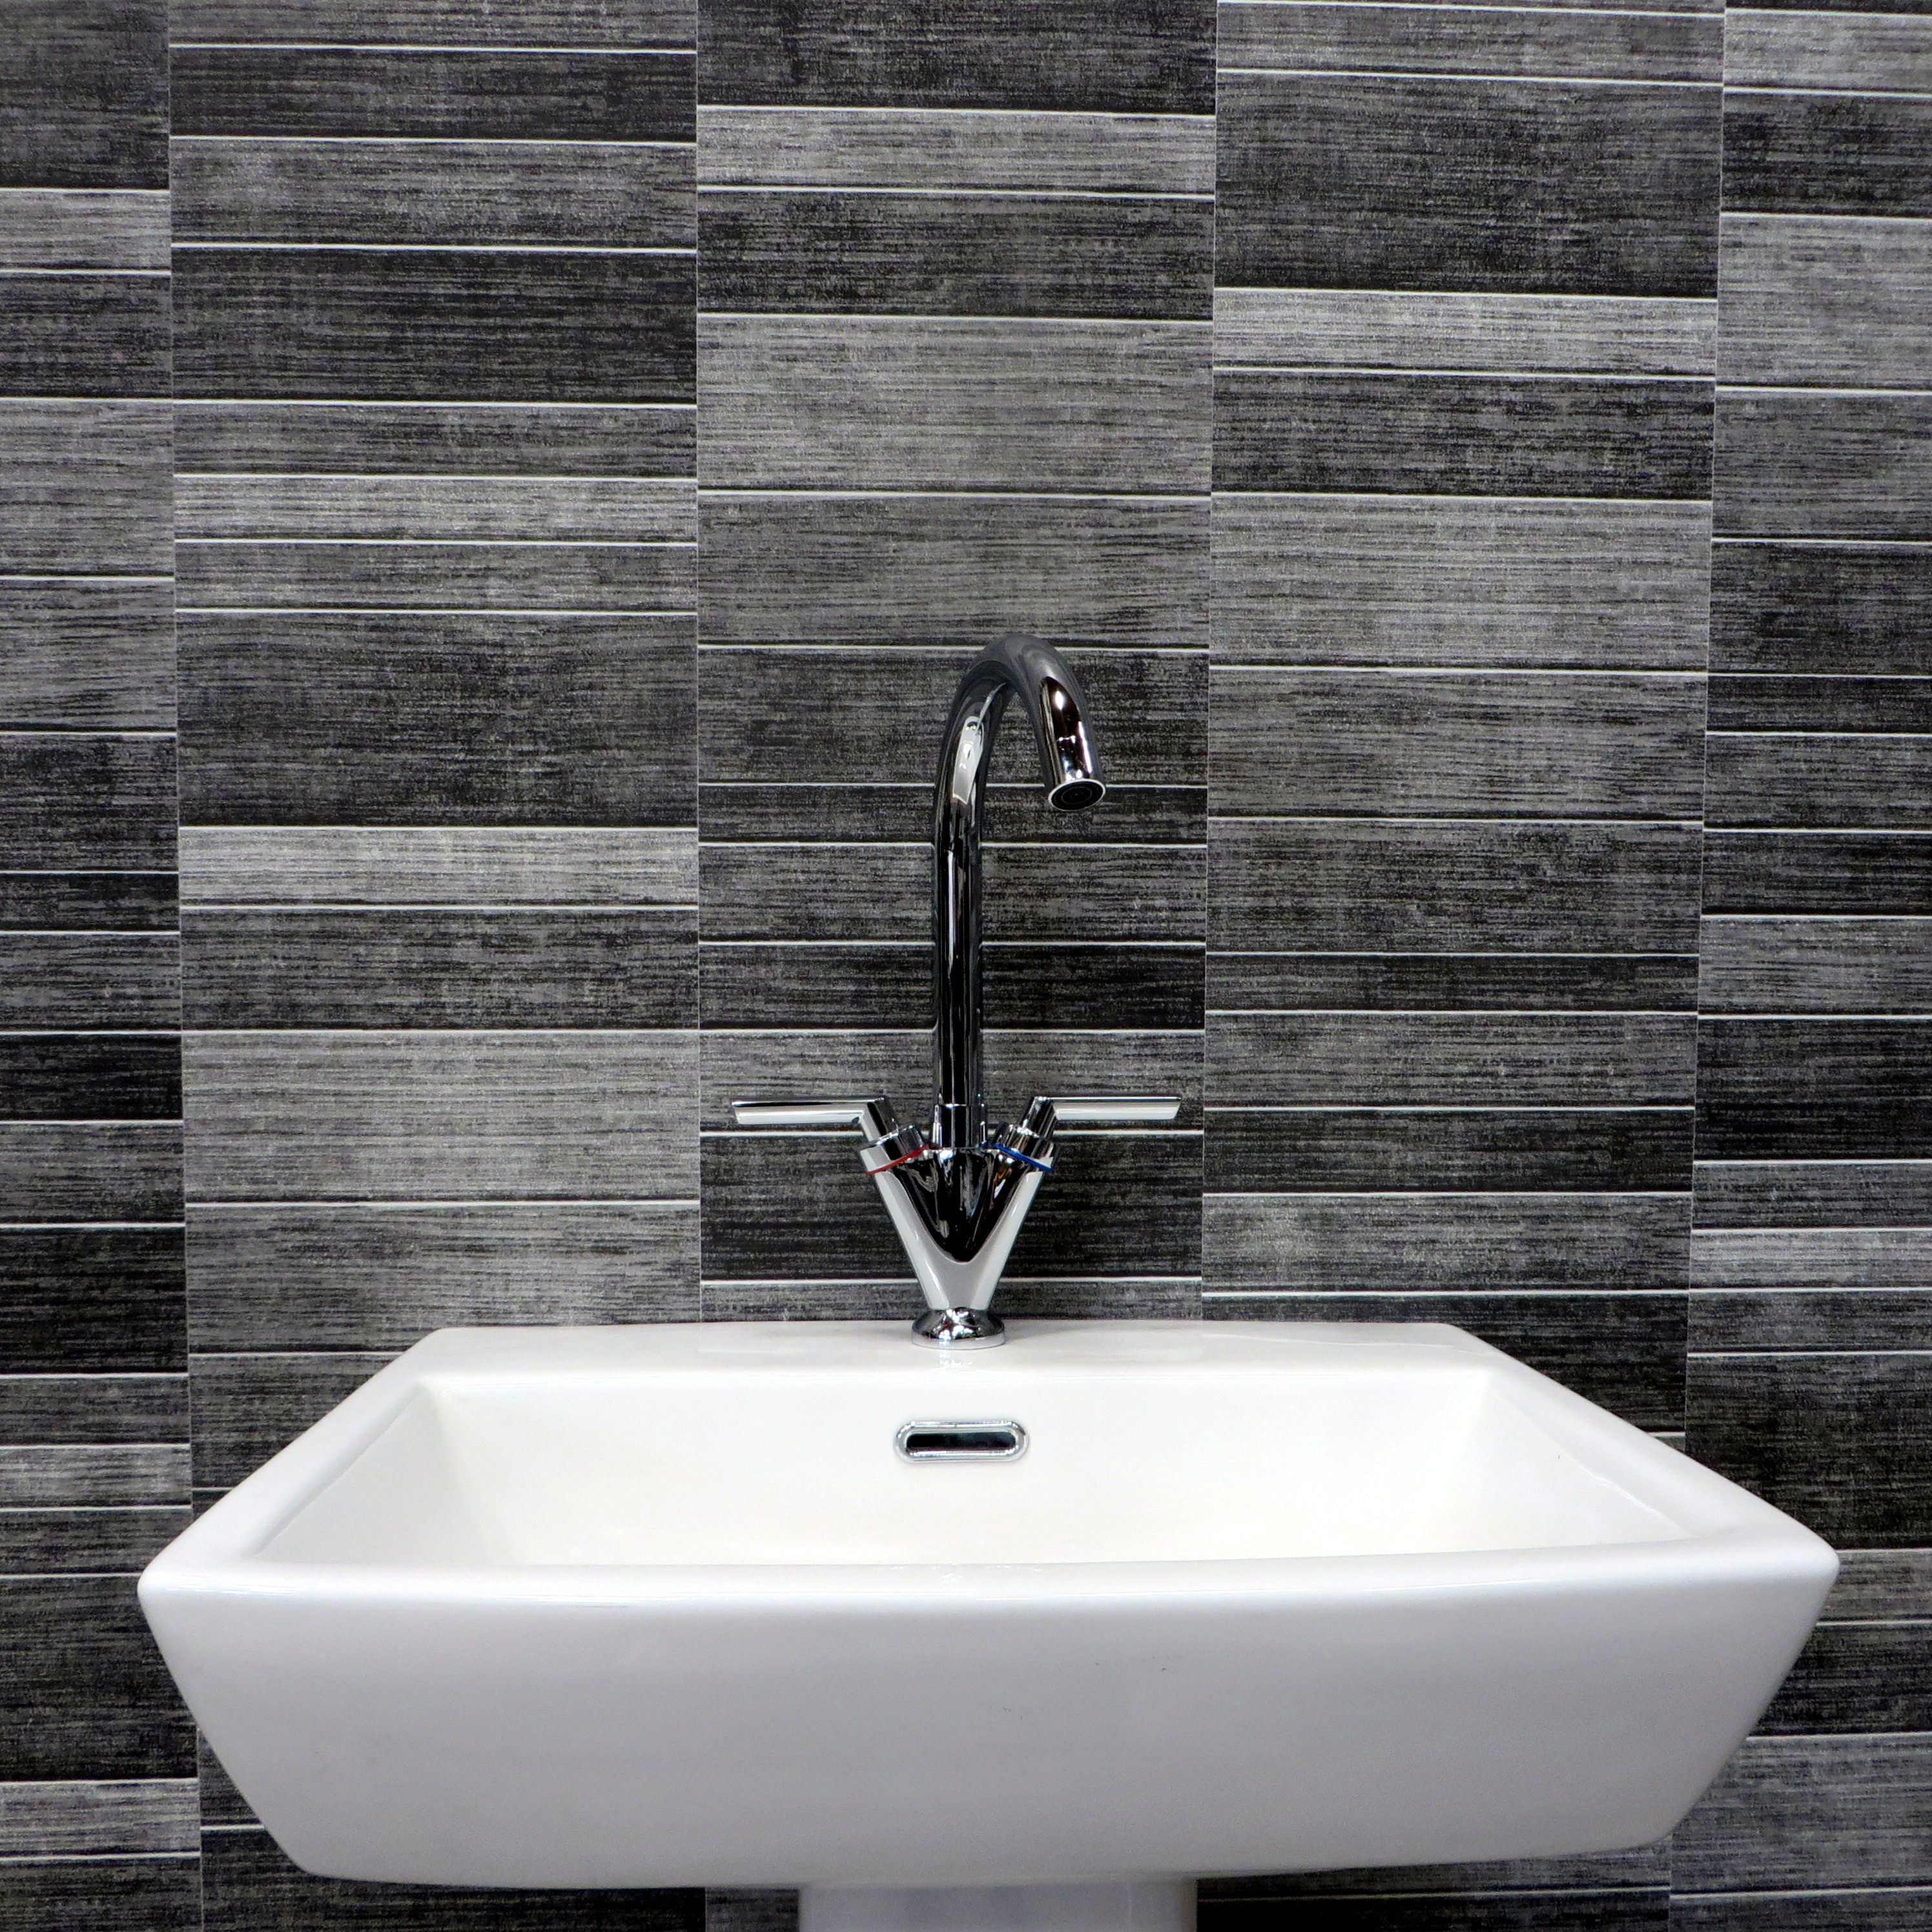 Sample of Dark Grey Small Tile 10mm Bathroom Cladding Shower Wall Panels